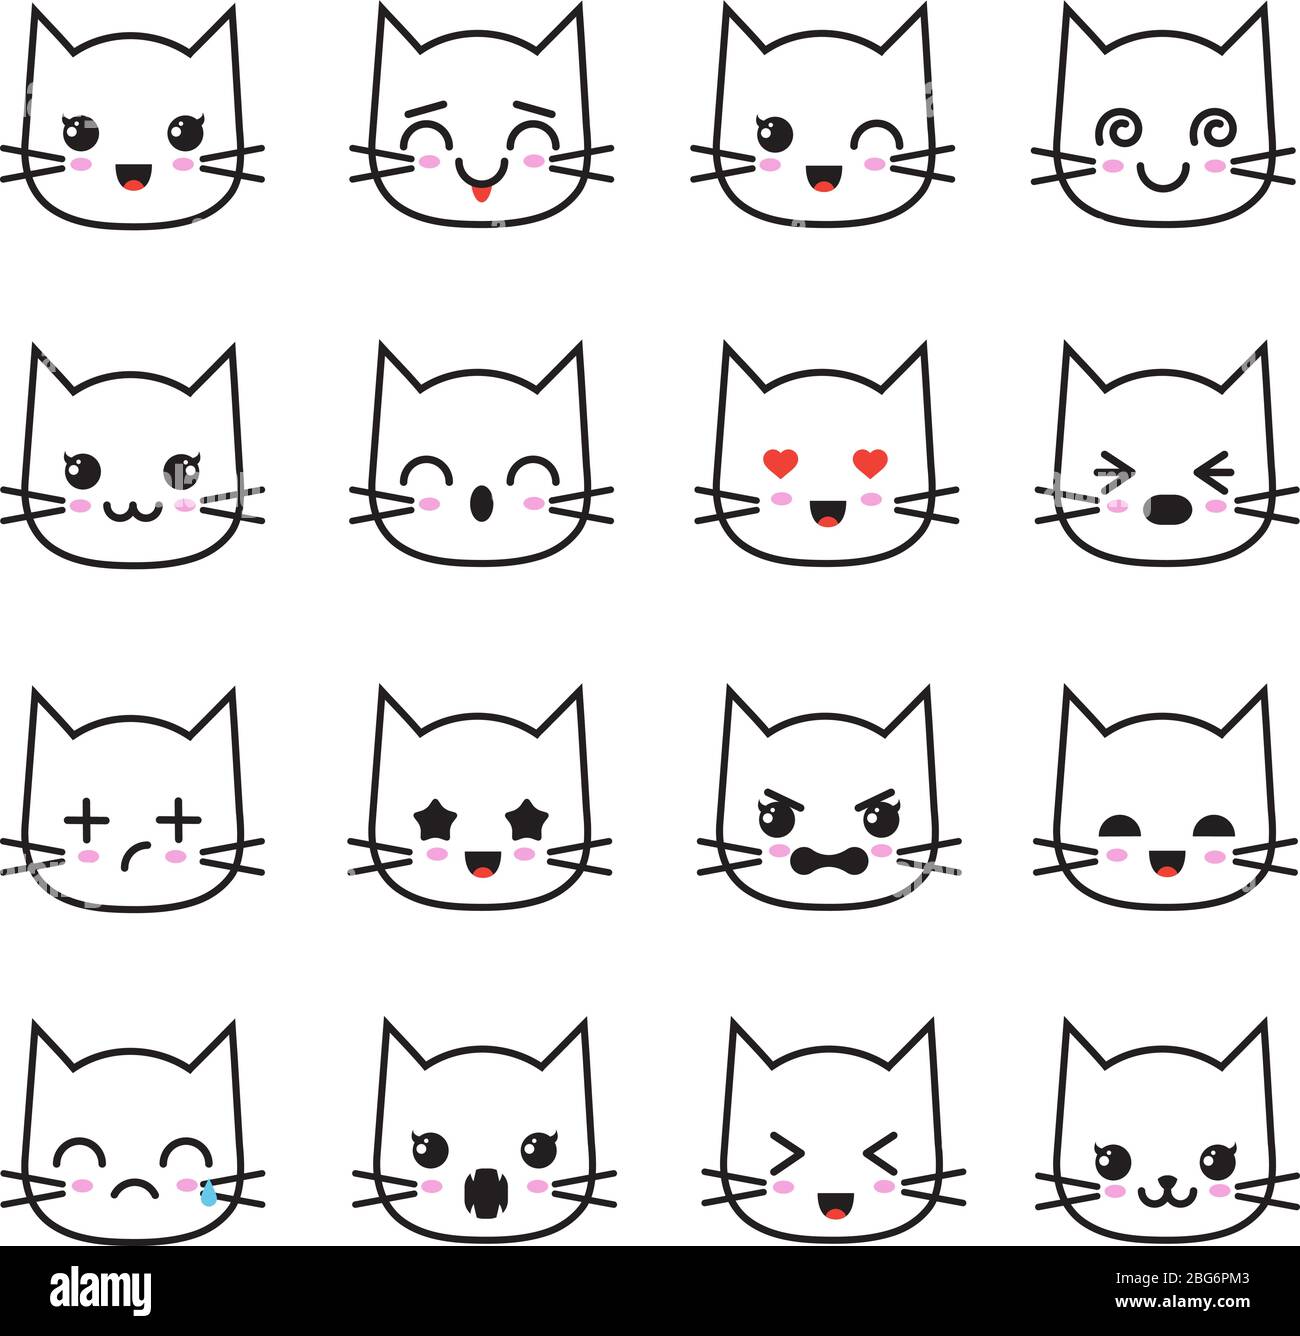 Black cat round face icon. Cute cartoon funny character. Kawaii